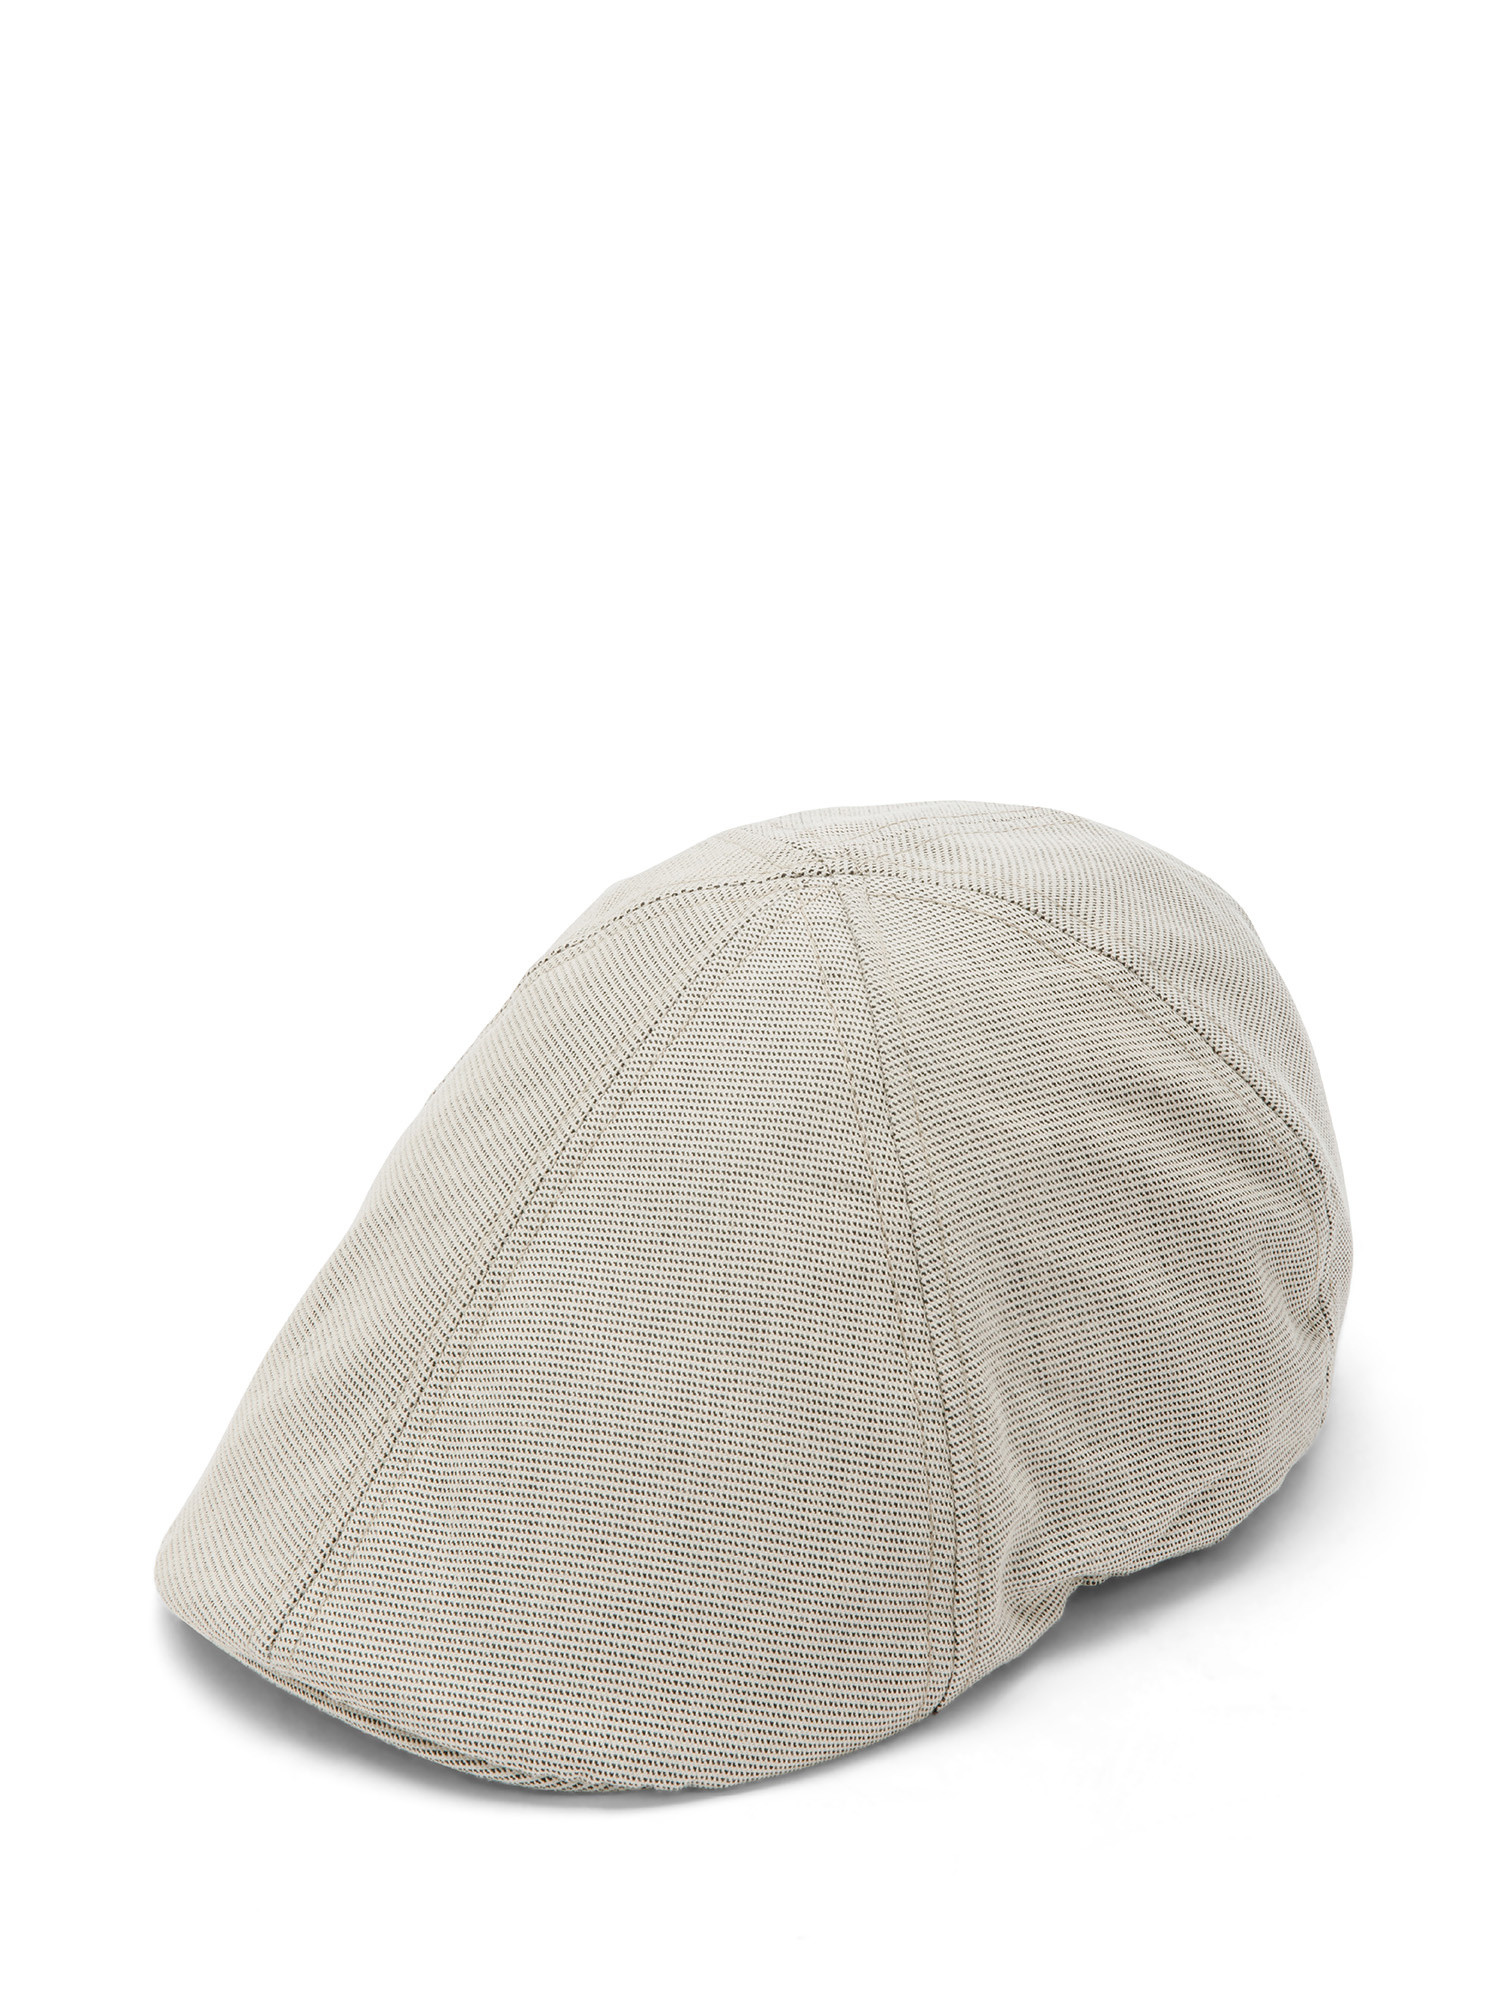 Luca D'Altieri - Cotton cap, Beige, large image number 0